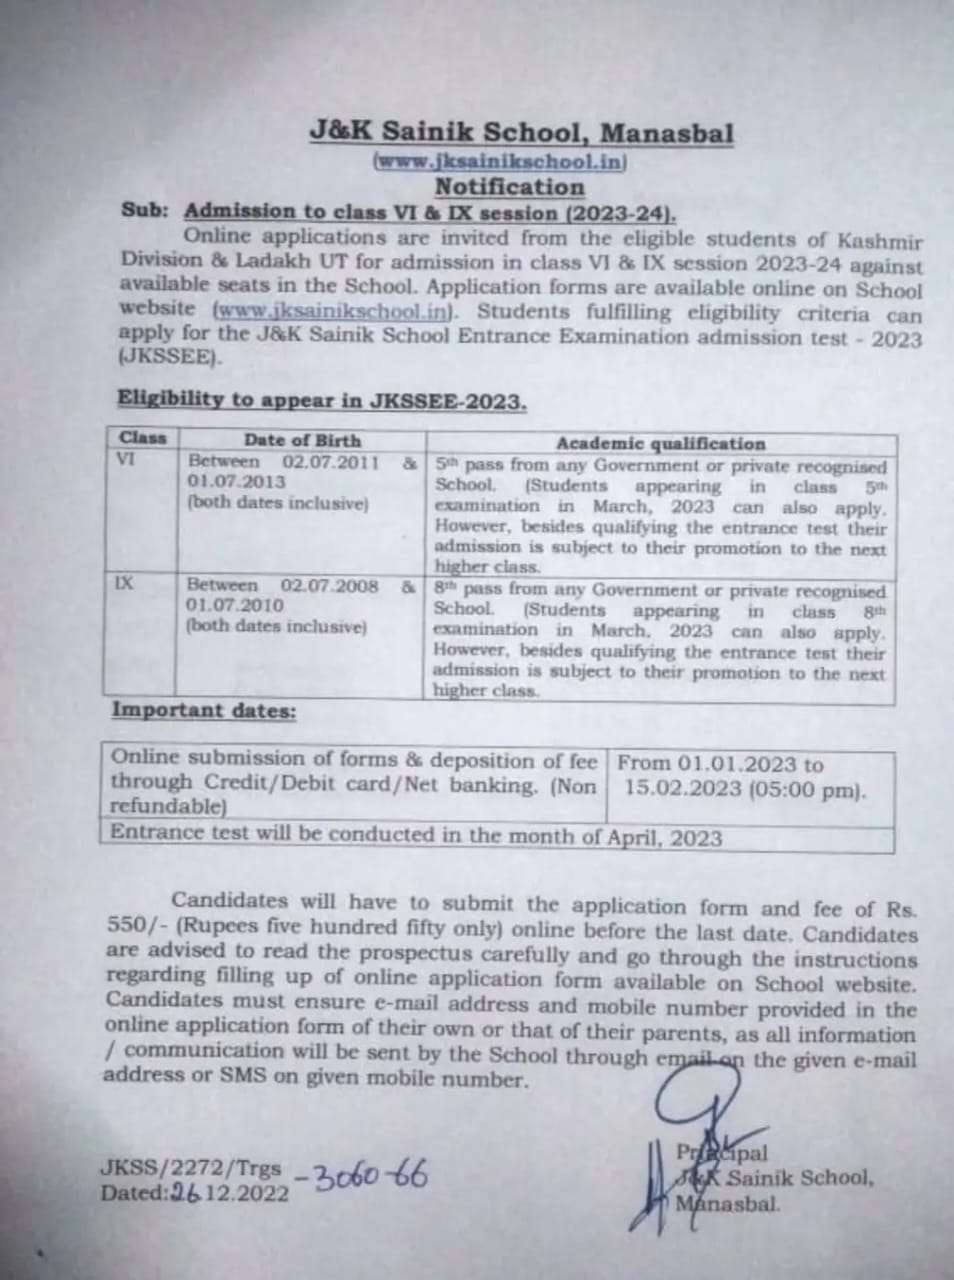 J&K Sainik School Manasbal Admission Notice for Class 6th and 9th Session 2023